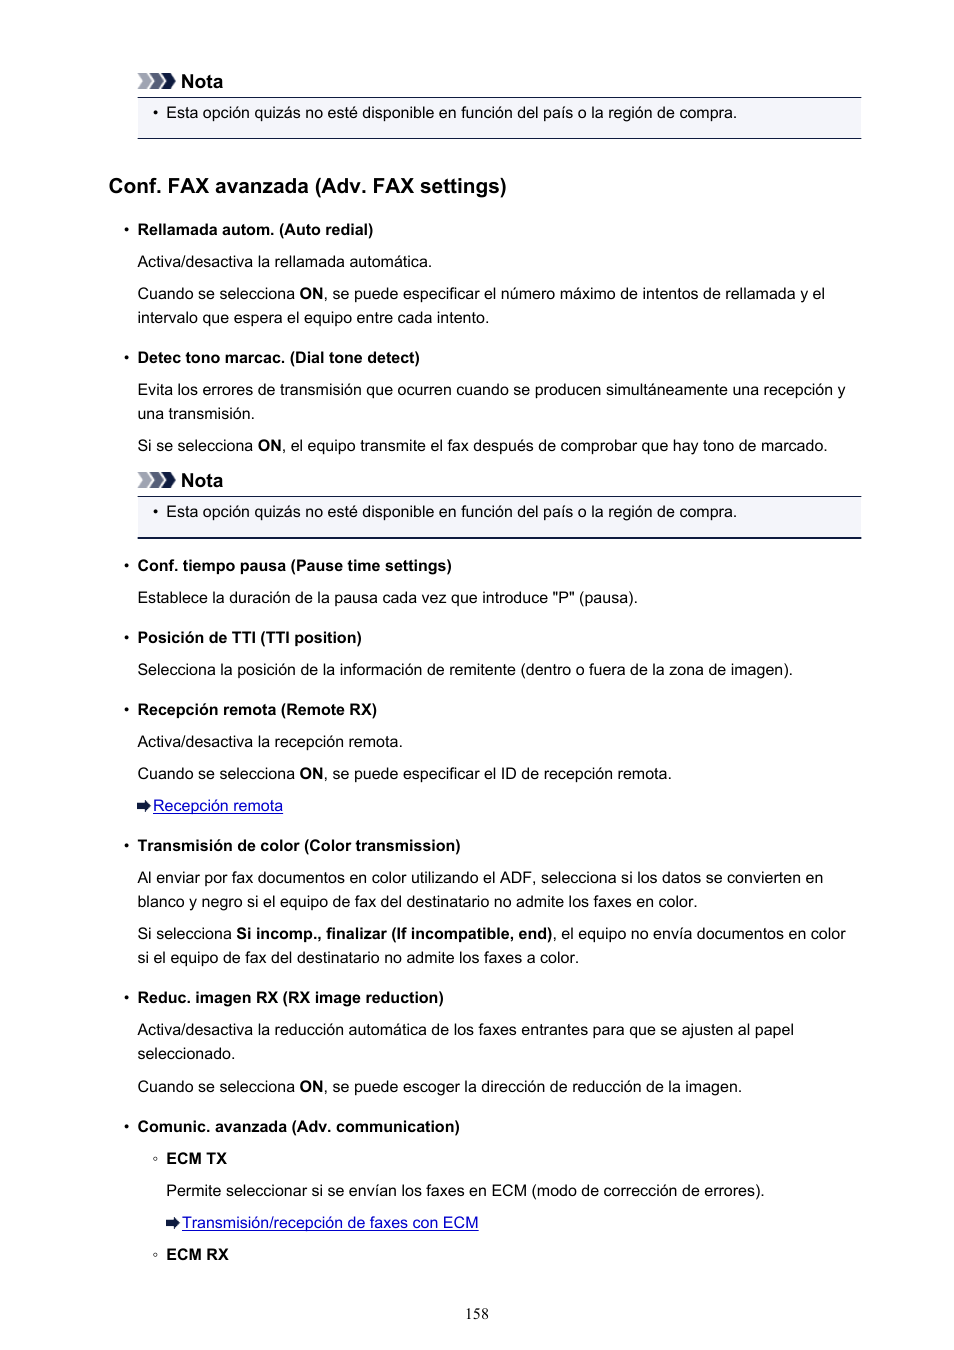 Conf. fax avanzada (adv. fax settings) | Canon PIXMA MX475 Manual del usuario | Página 158 / 725